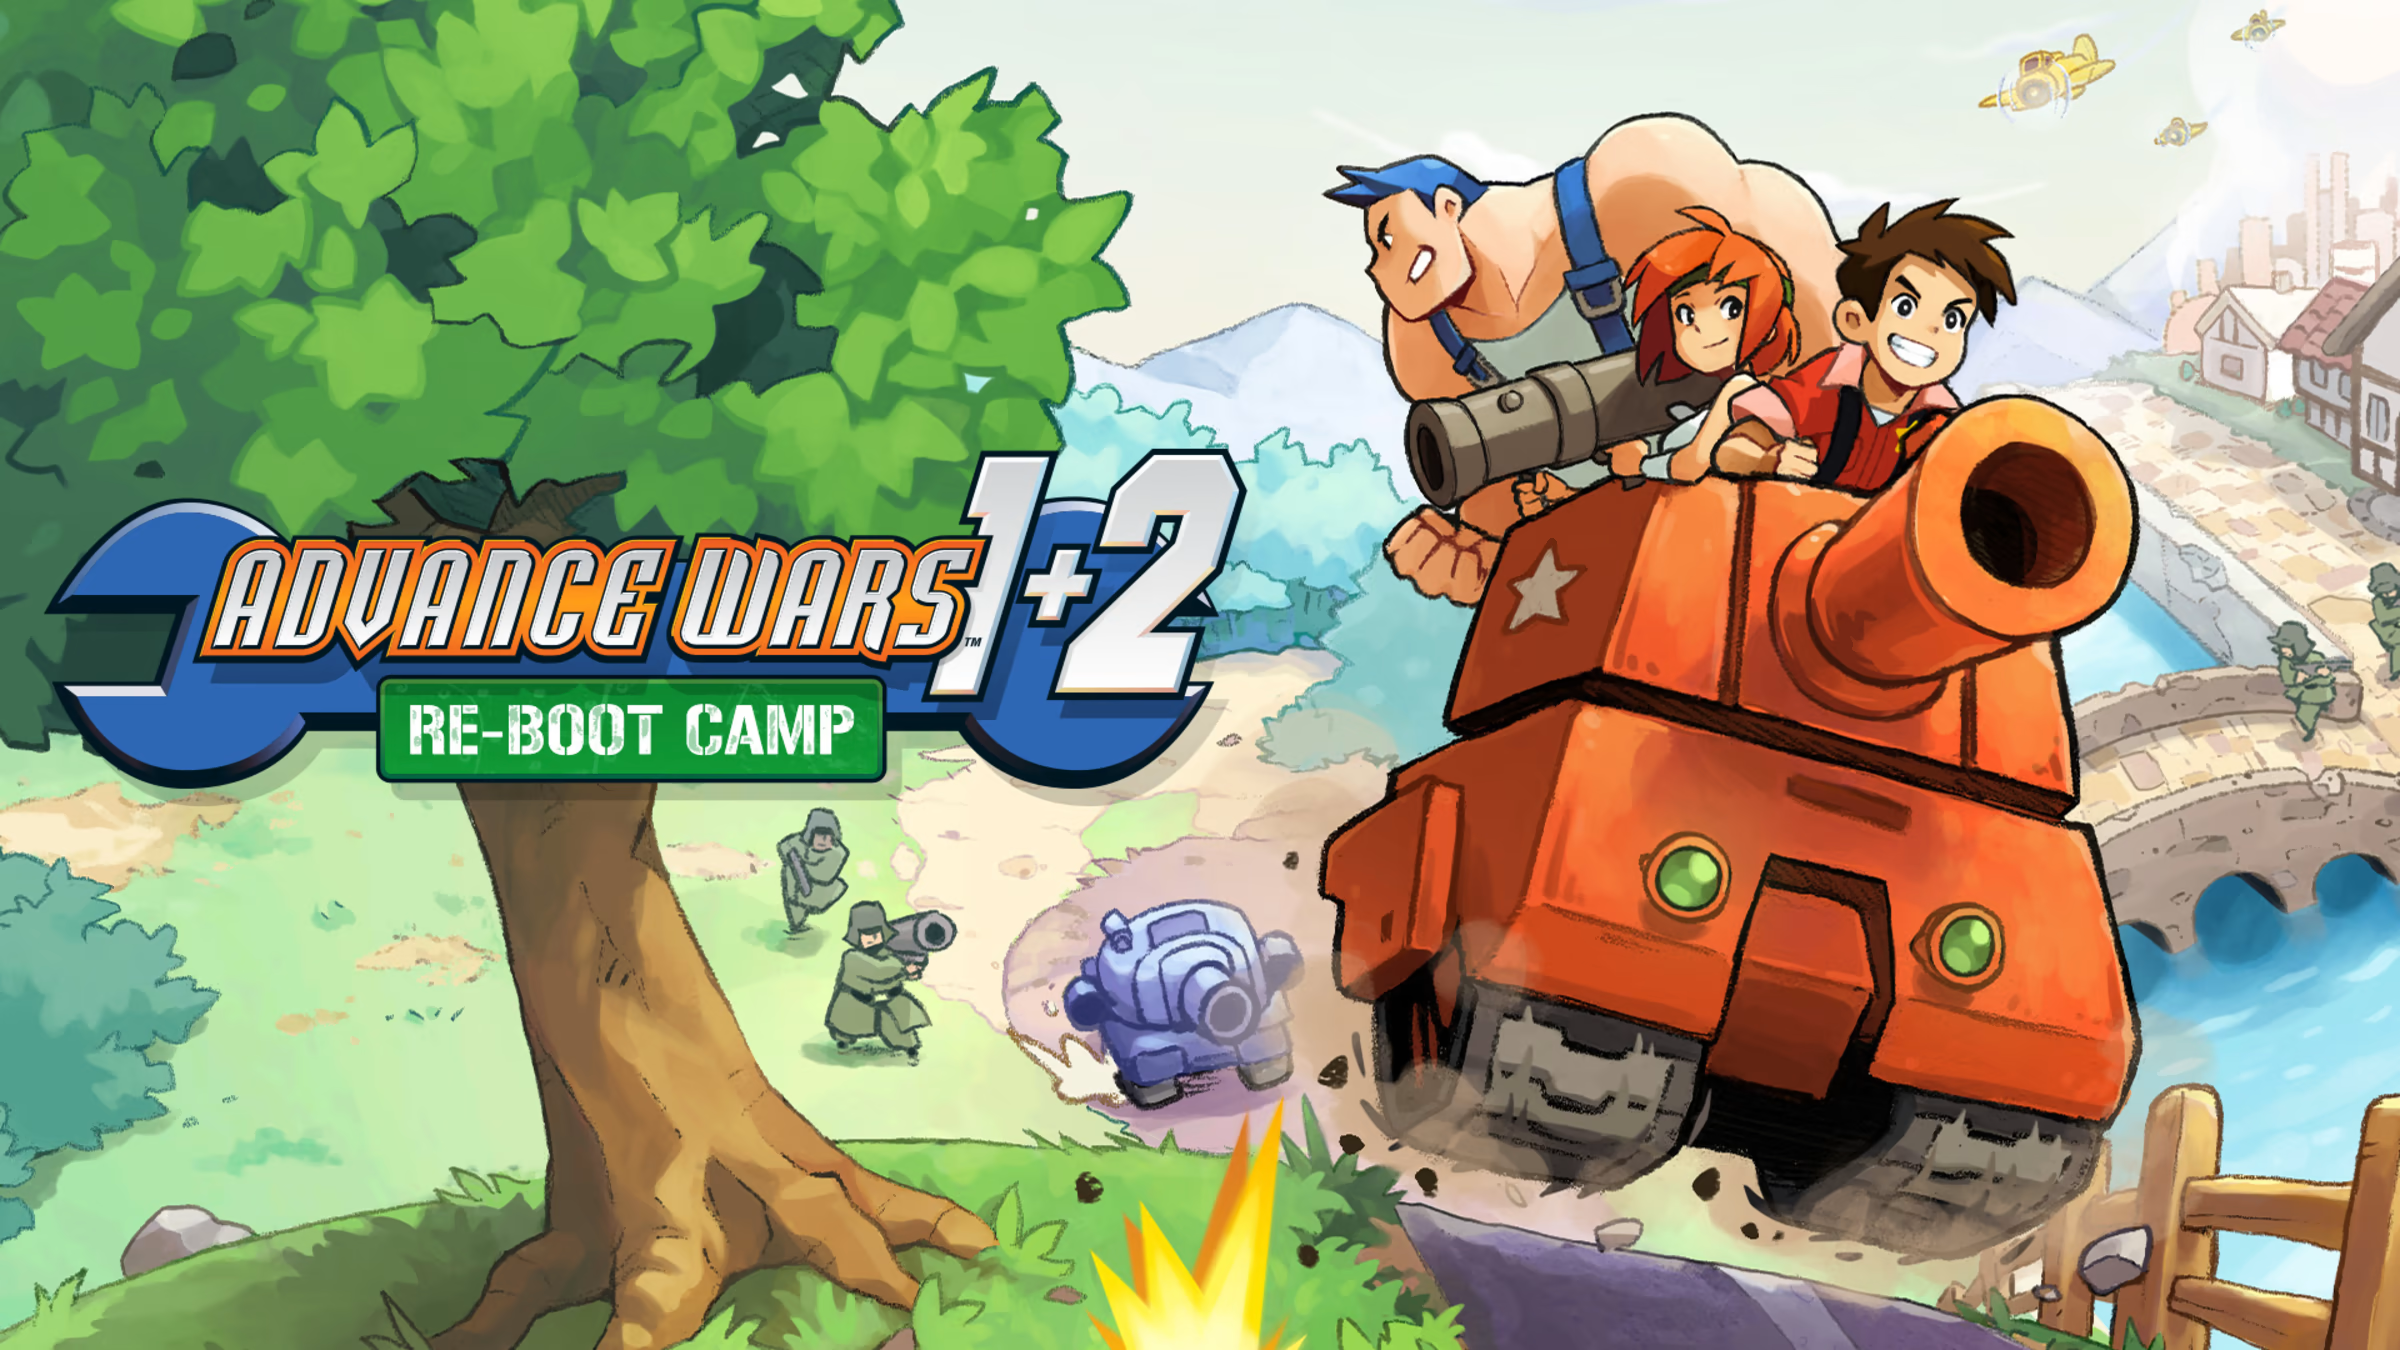 Advance Wars 1+2 Reboot Camp poster